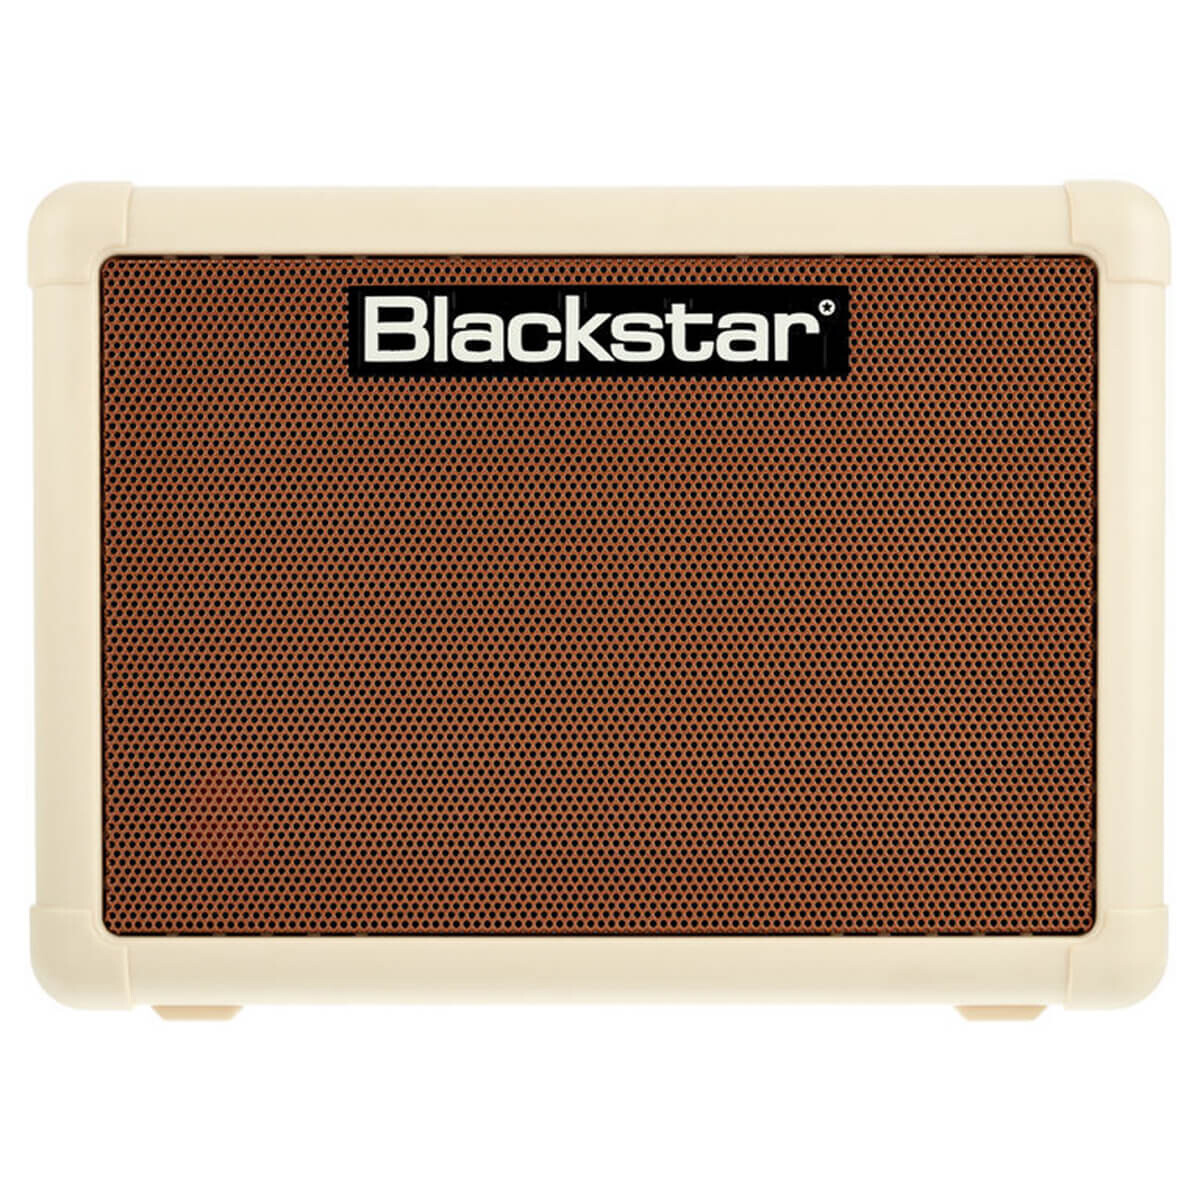 Blackstar lance un mini-ampli de 3W